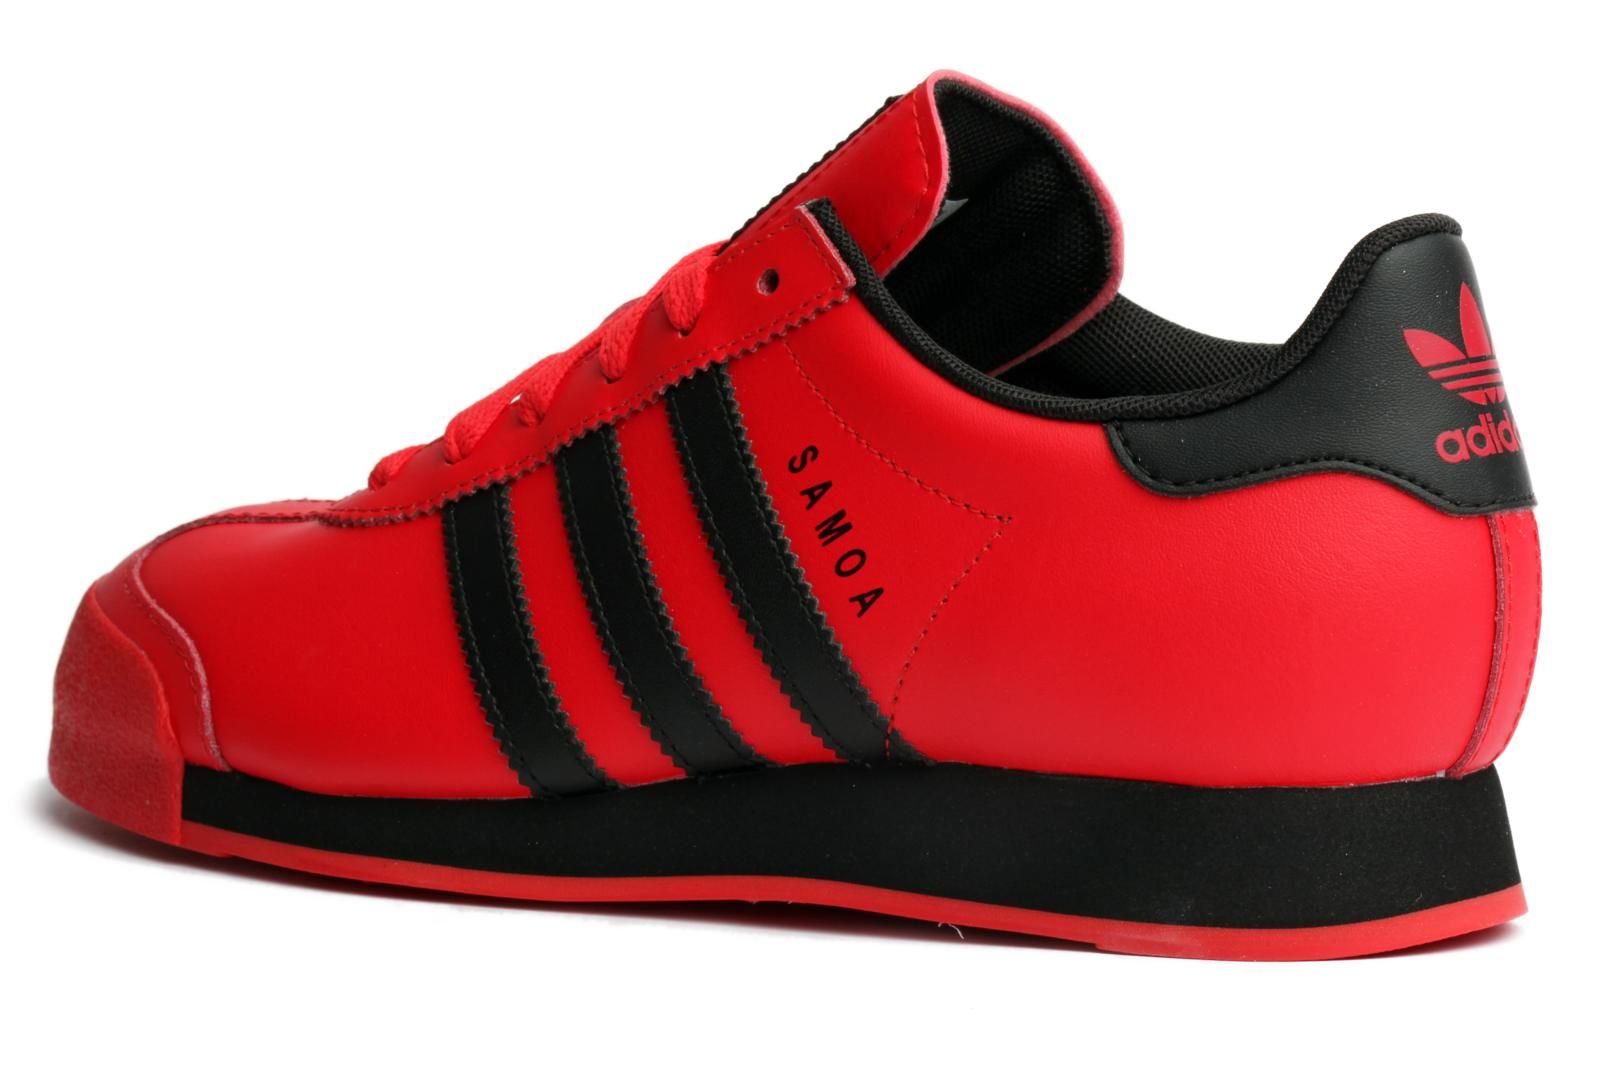 Adidas Kids Samoa J Vivid Red Black G67229 | eBay